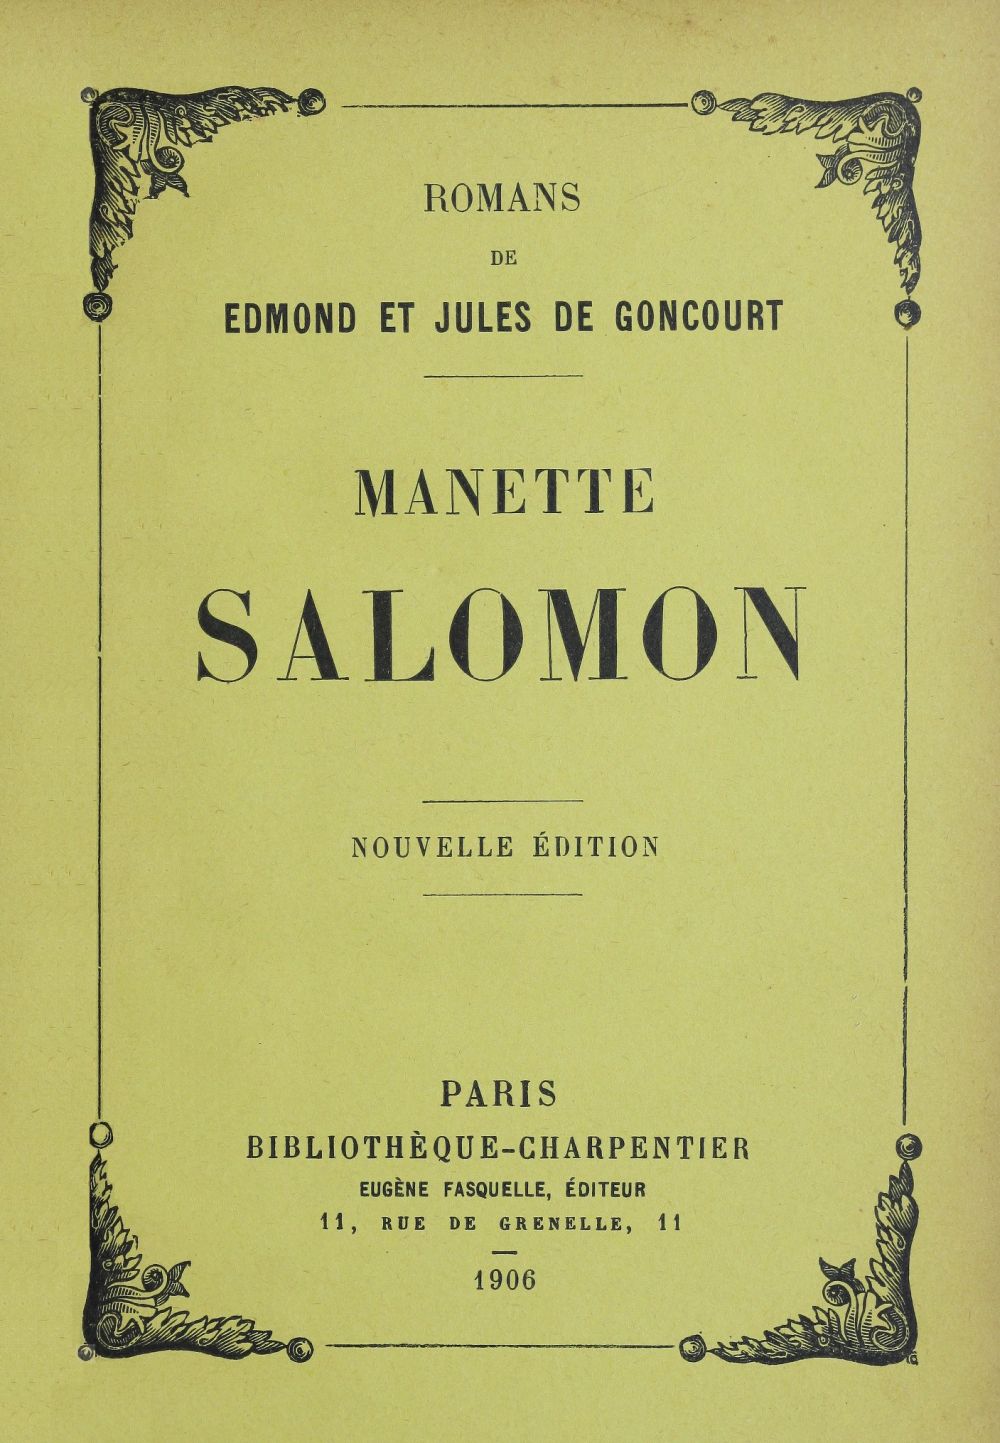 Manette Salomon